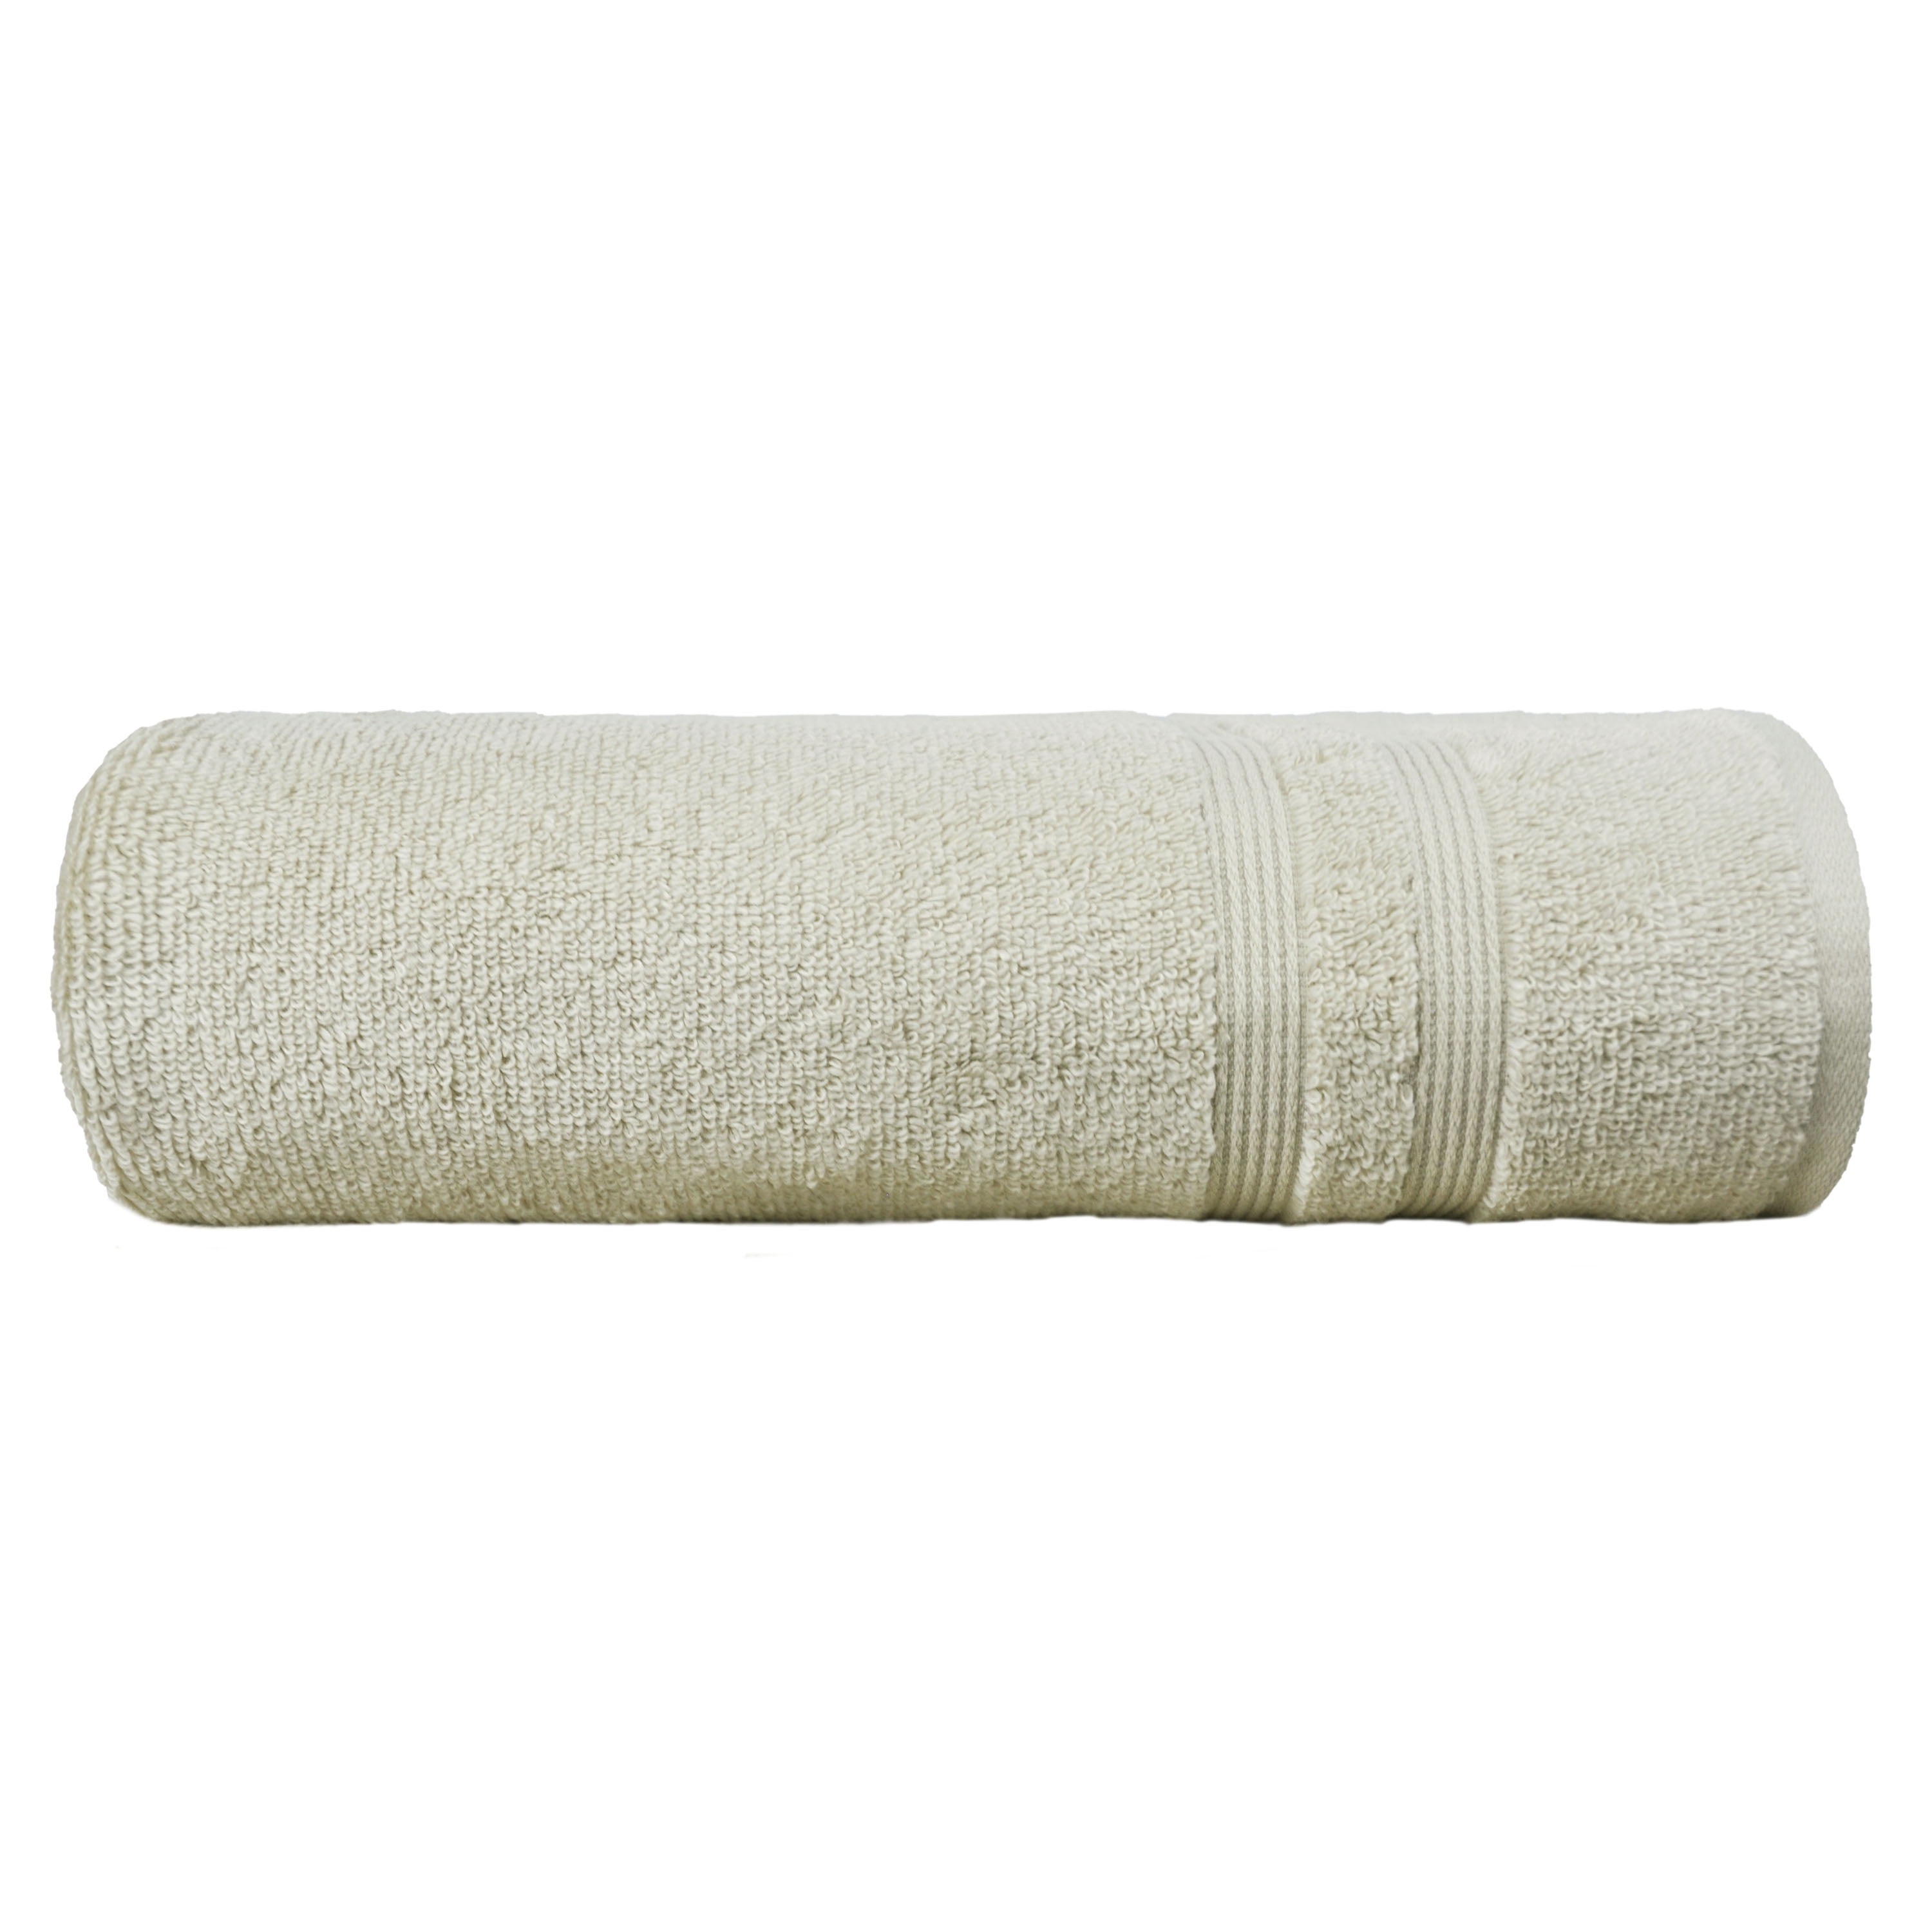 Golden Quality Bedding 100% Cotton Towels Sage Green, Bath Towel 26 X 52 